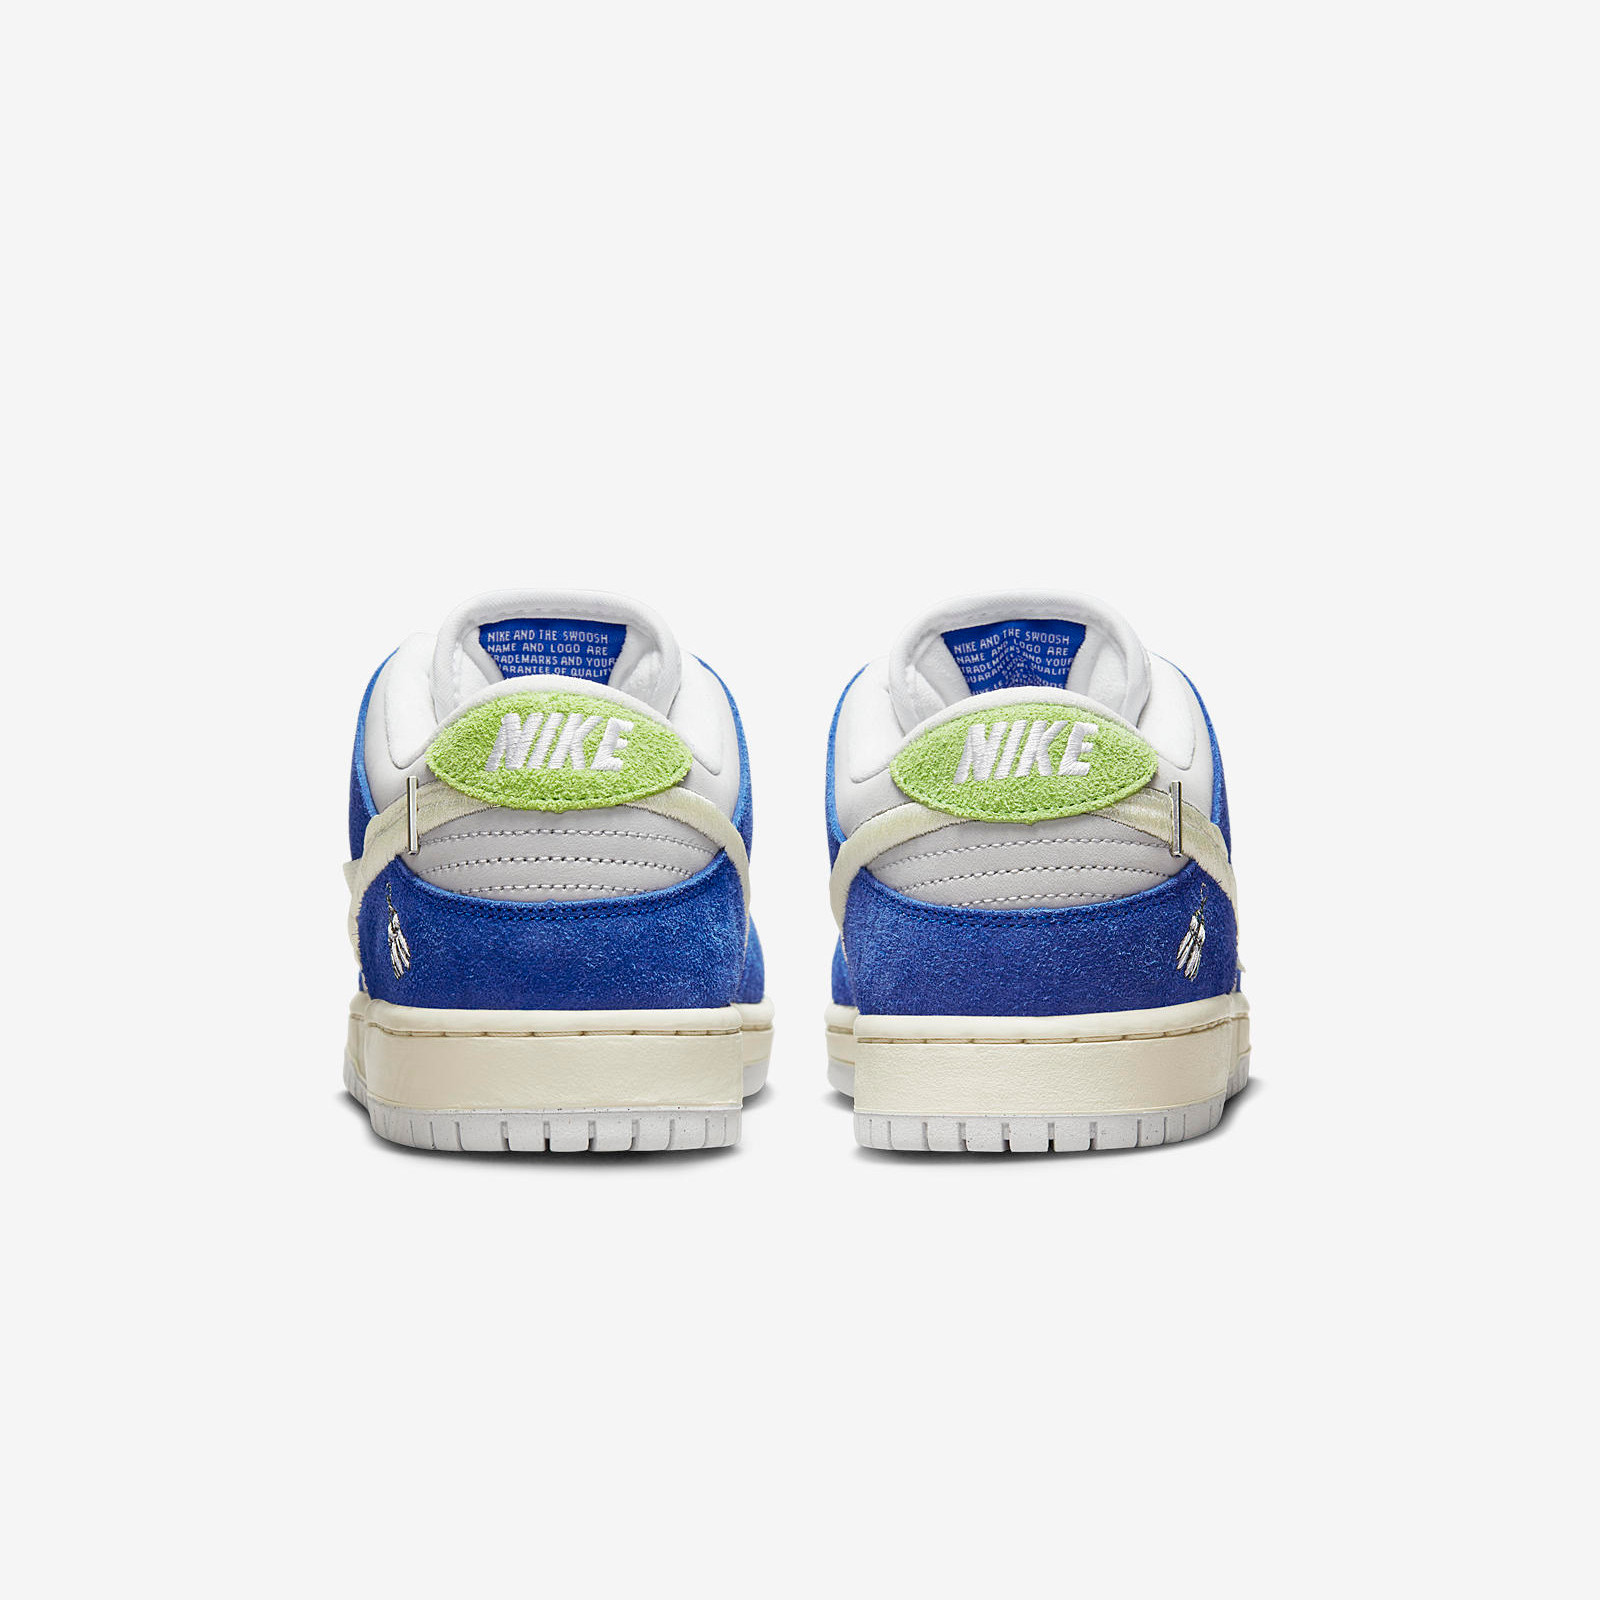 Fly Streetwear x Nike SB
Dunk Low
« Gardenia »